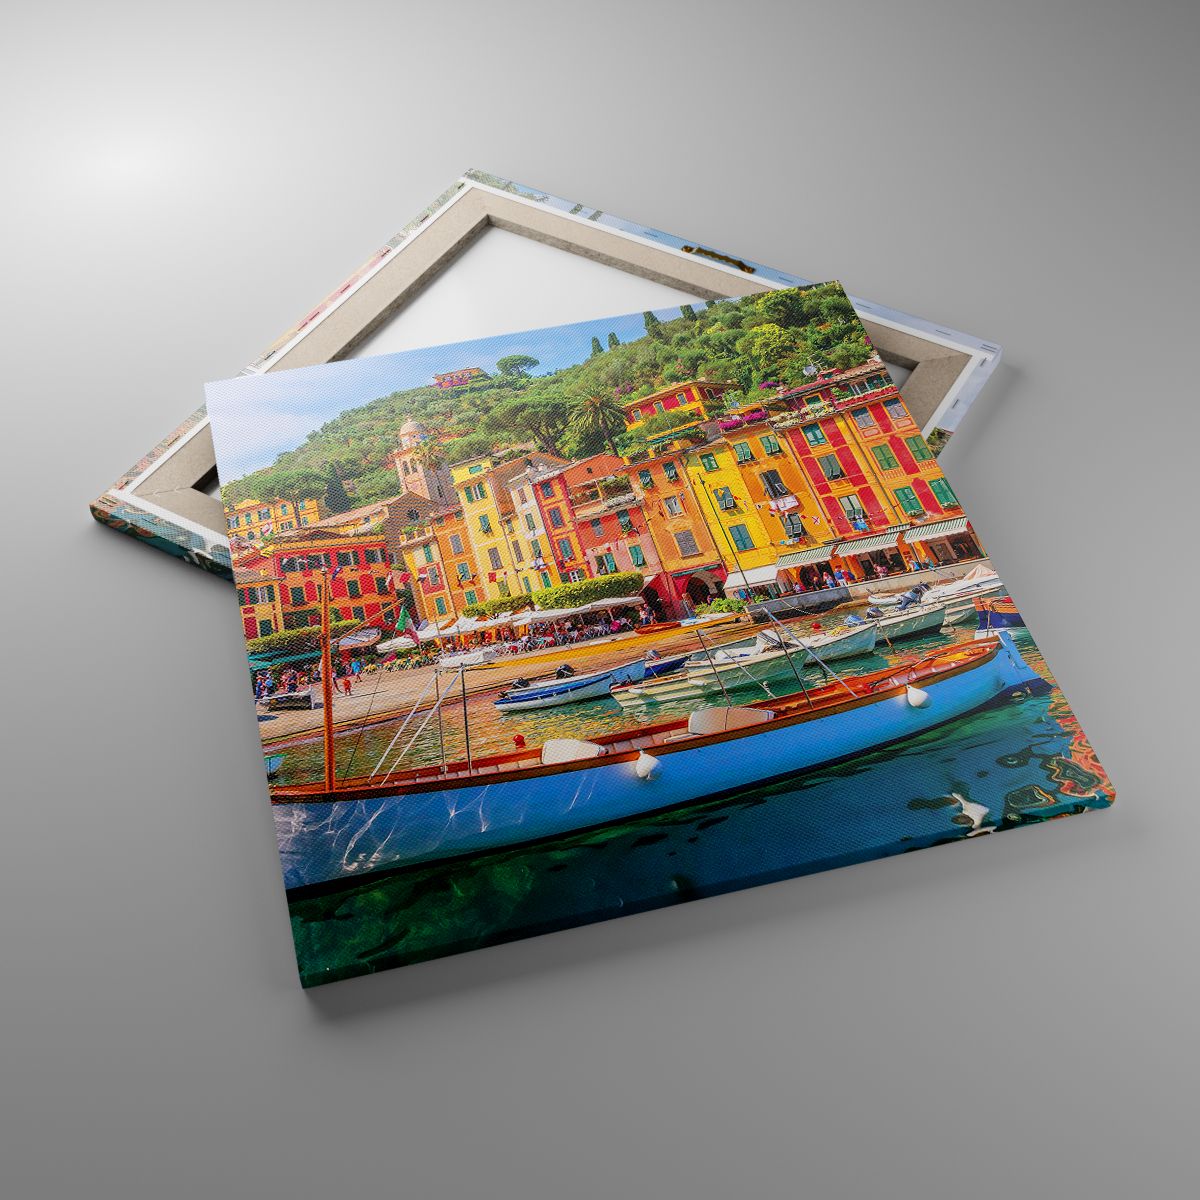 Obrazy Architektura, Obrazy Portofino, Obrazy Włochy, Obrazy Łodzie, Obrazy Podróże